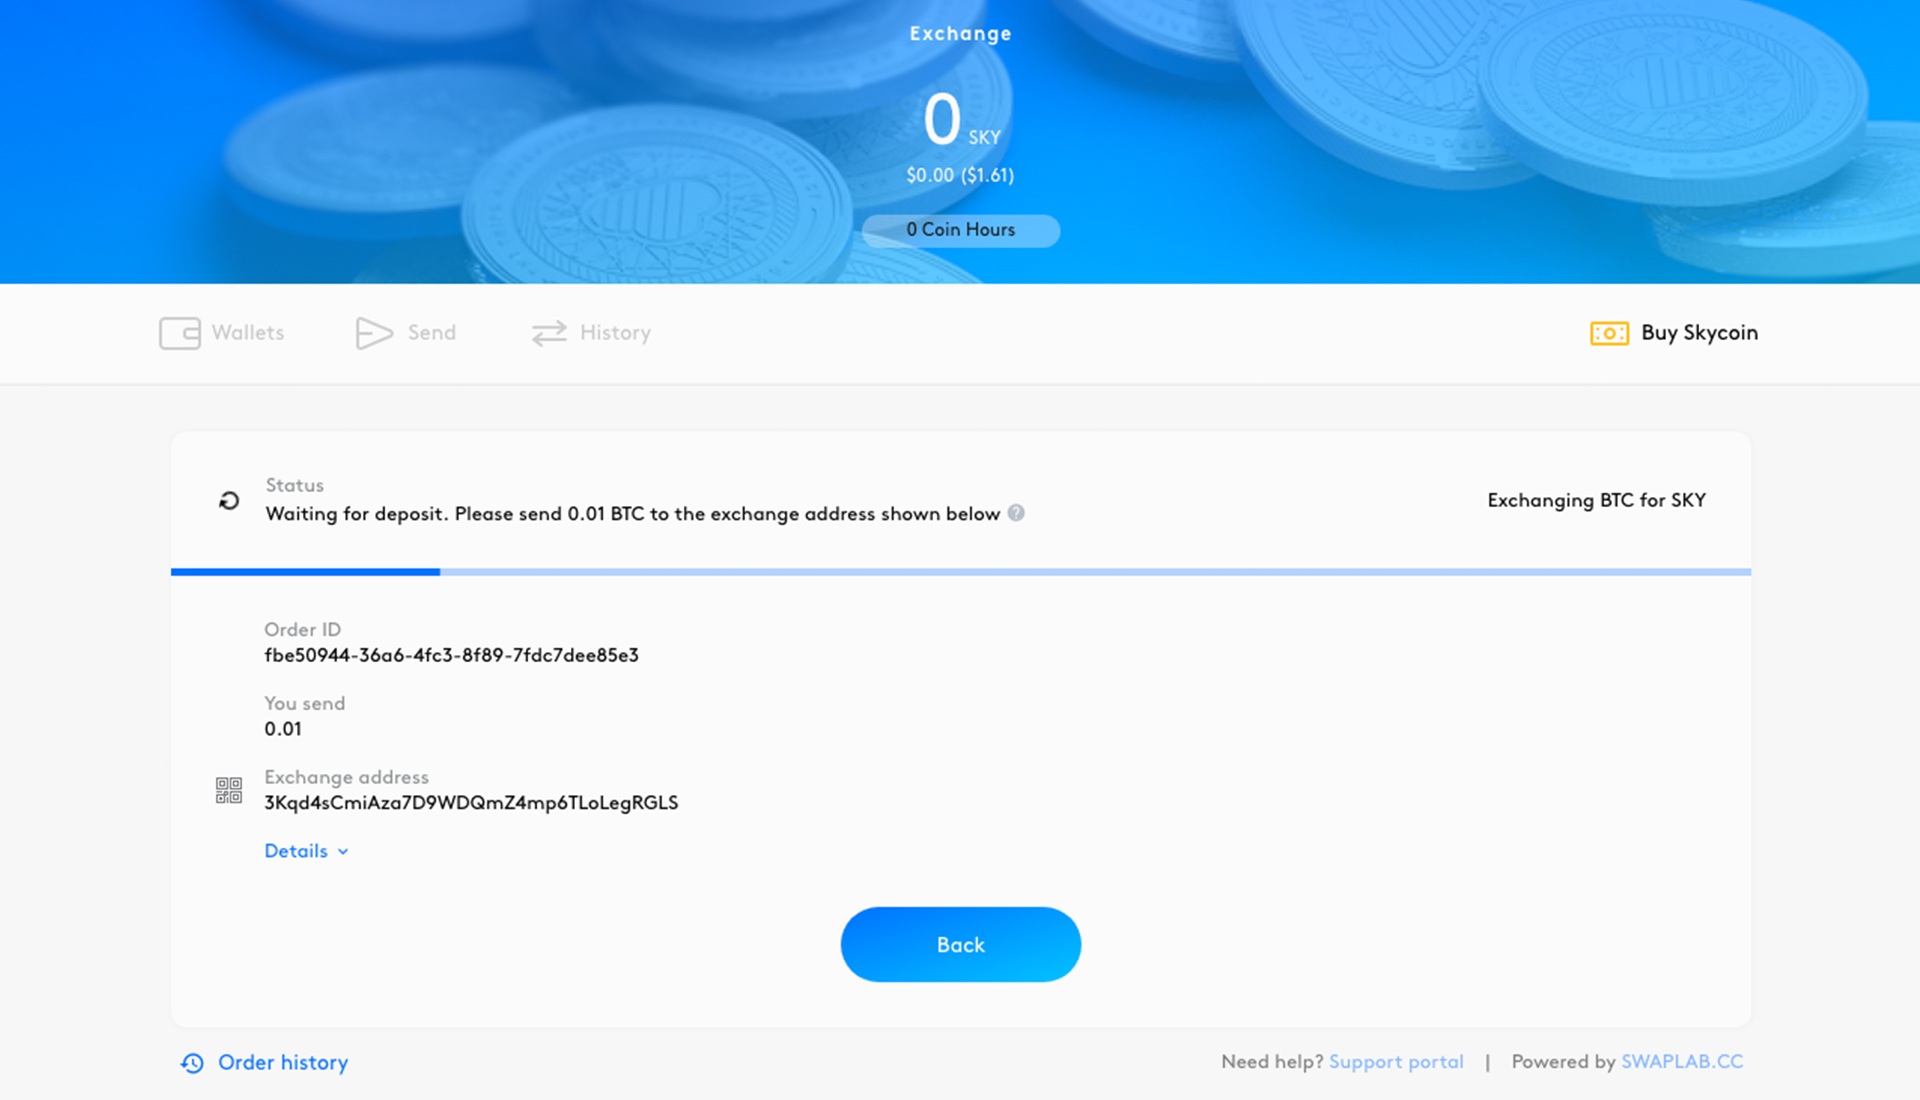 Buy Skycoin with Desktop Wallet